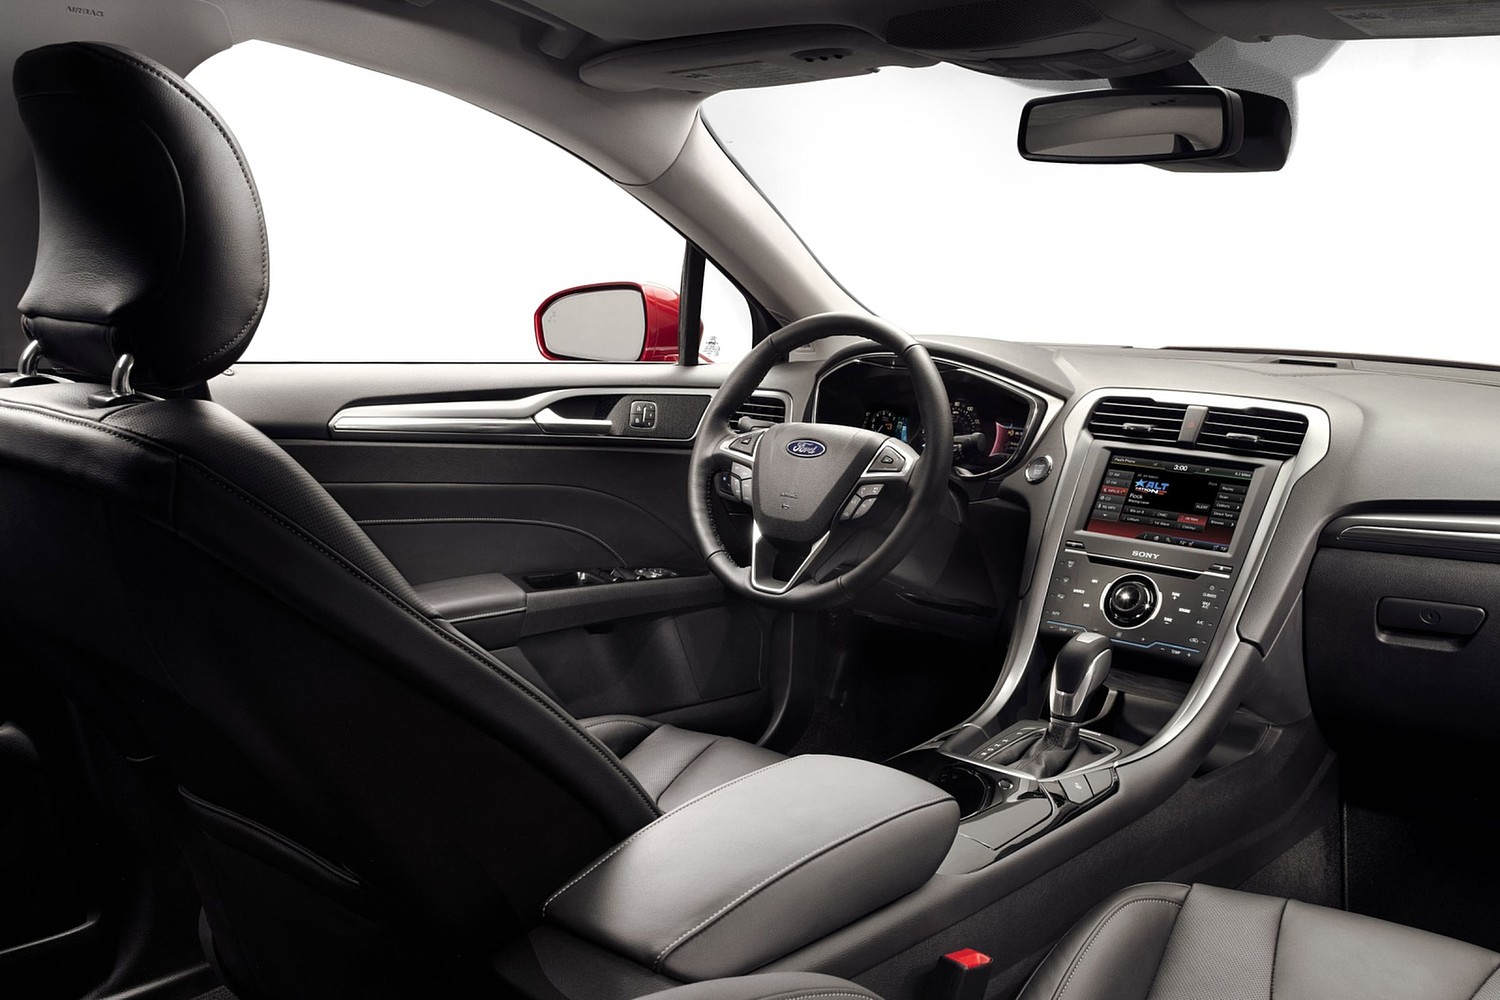 Ford Fusion Titanium Sedan Interior (2013 model year shown)